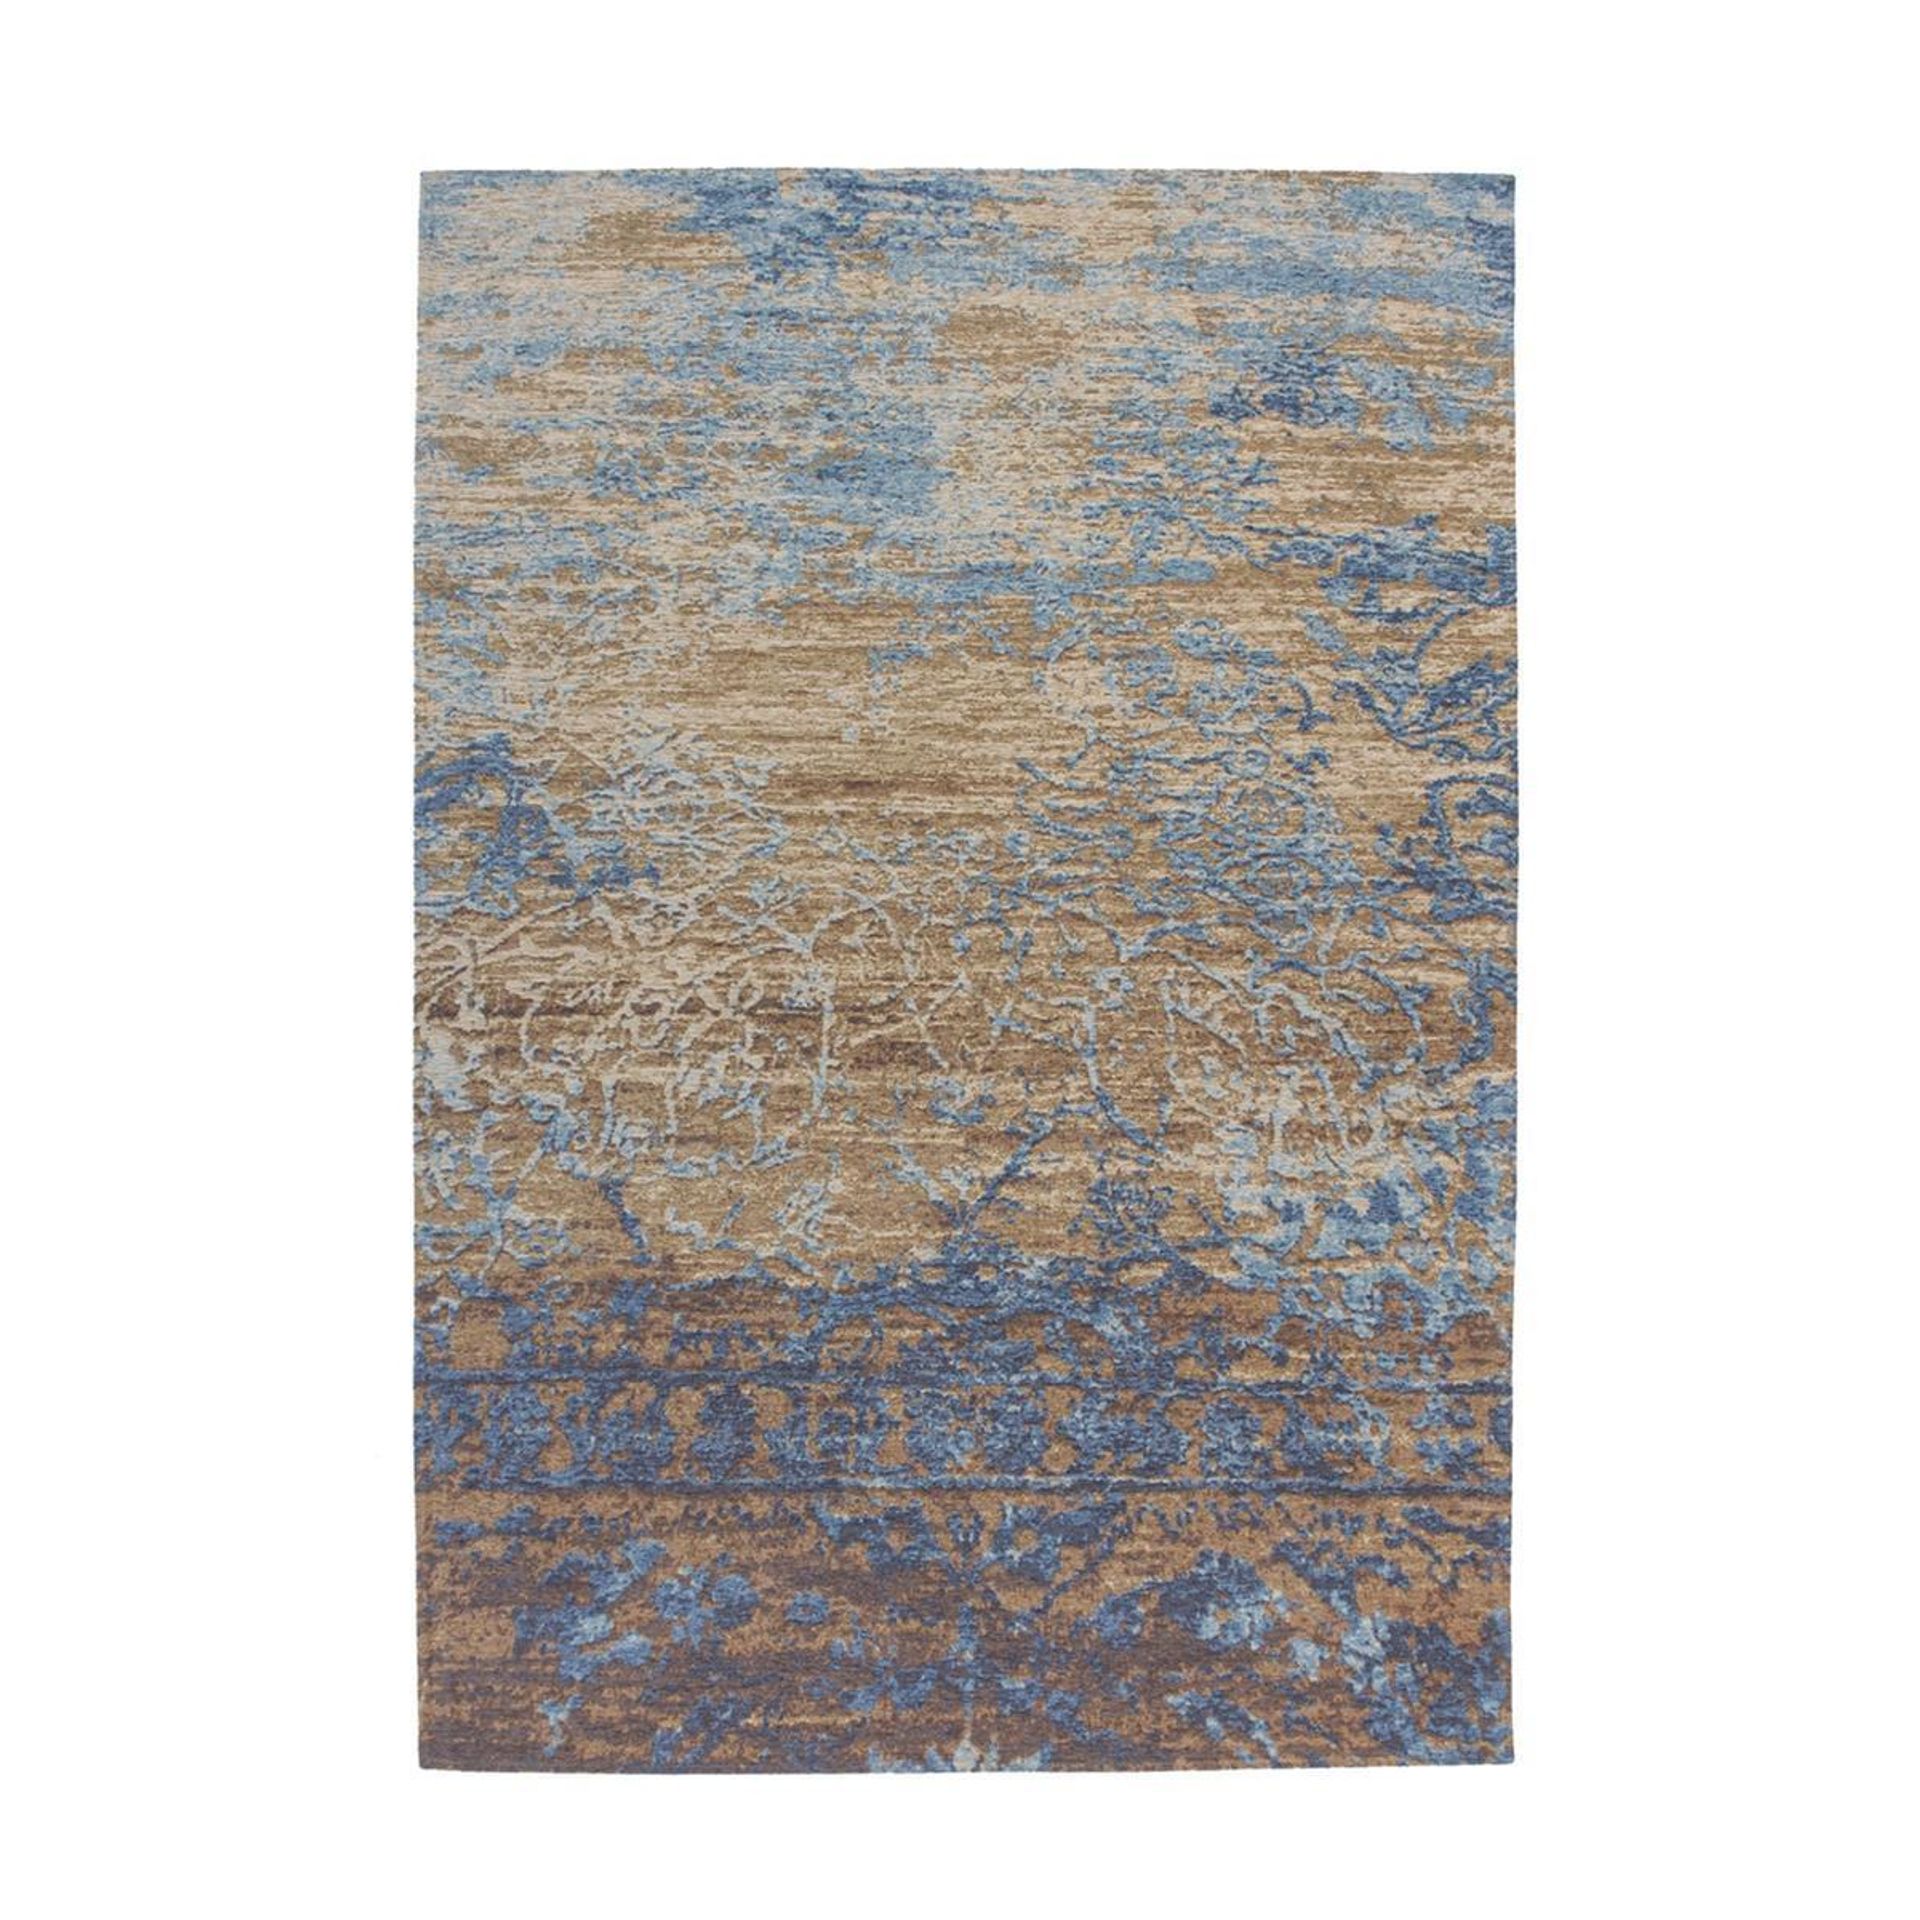 Teppich Blaze 600 Blau / Beige 75 cm x 150 cm